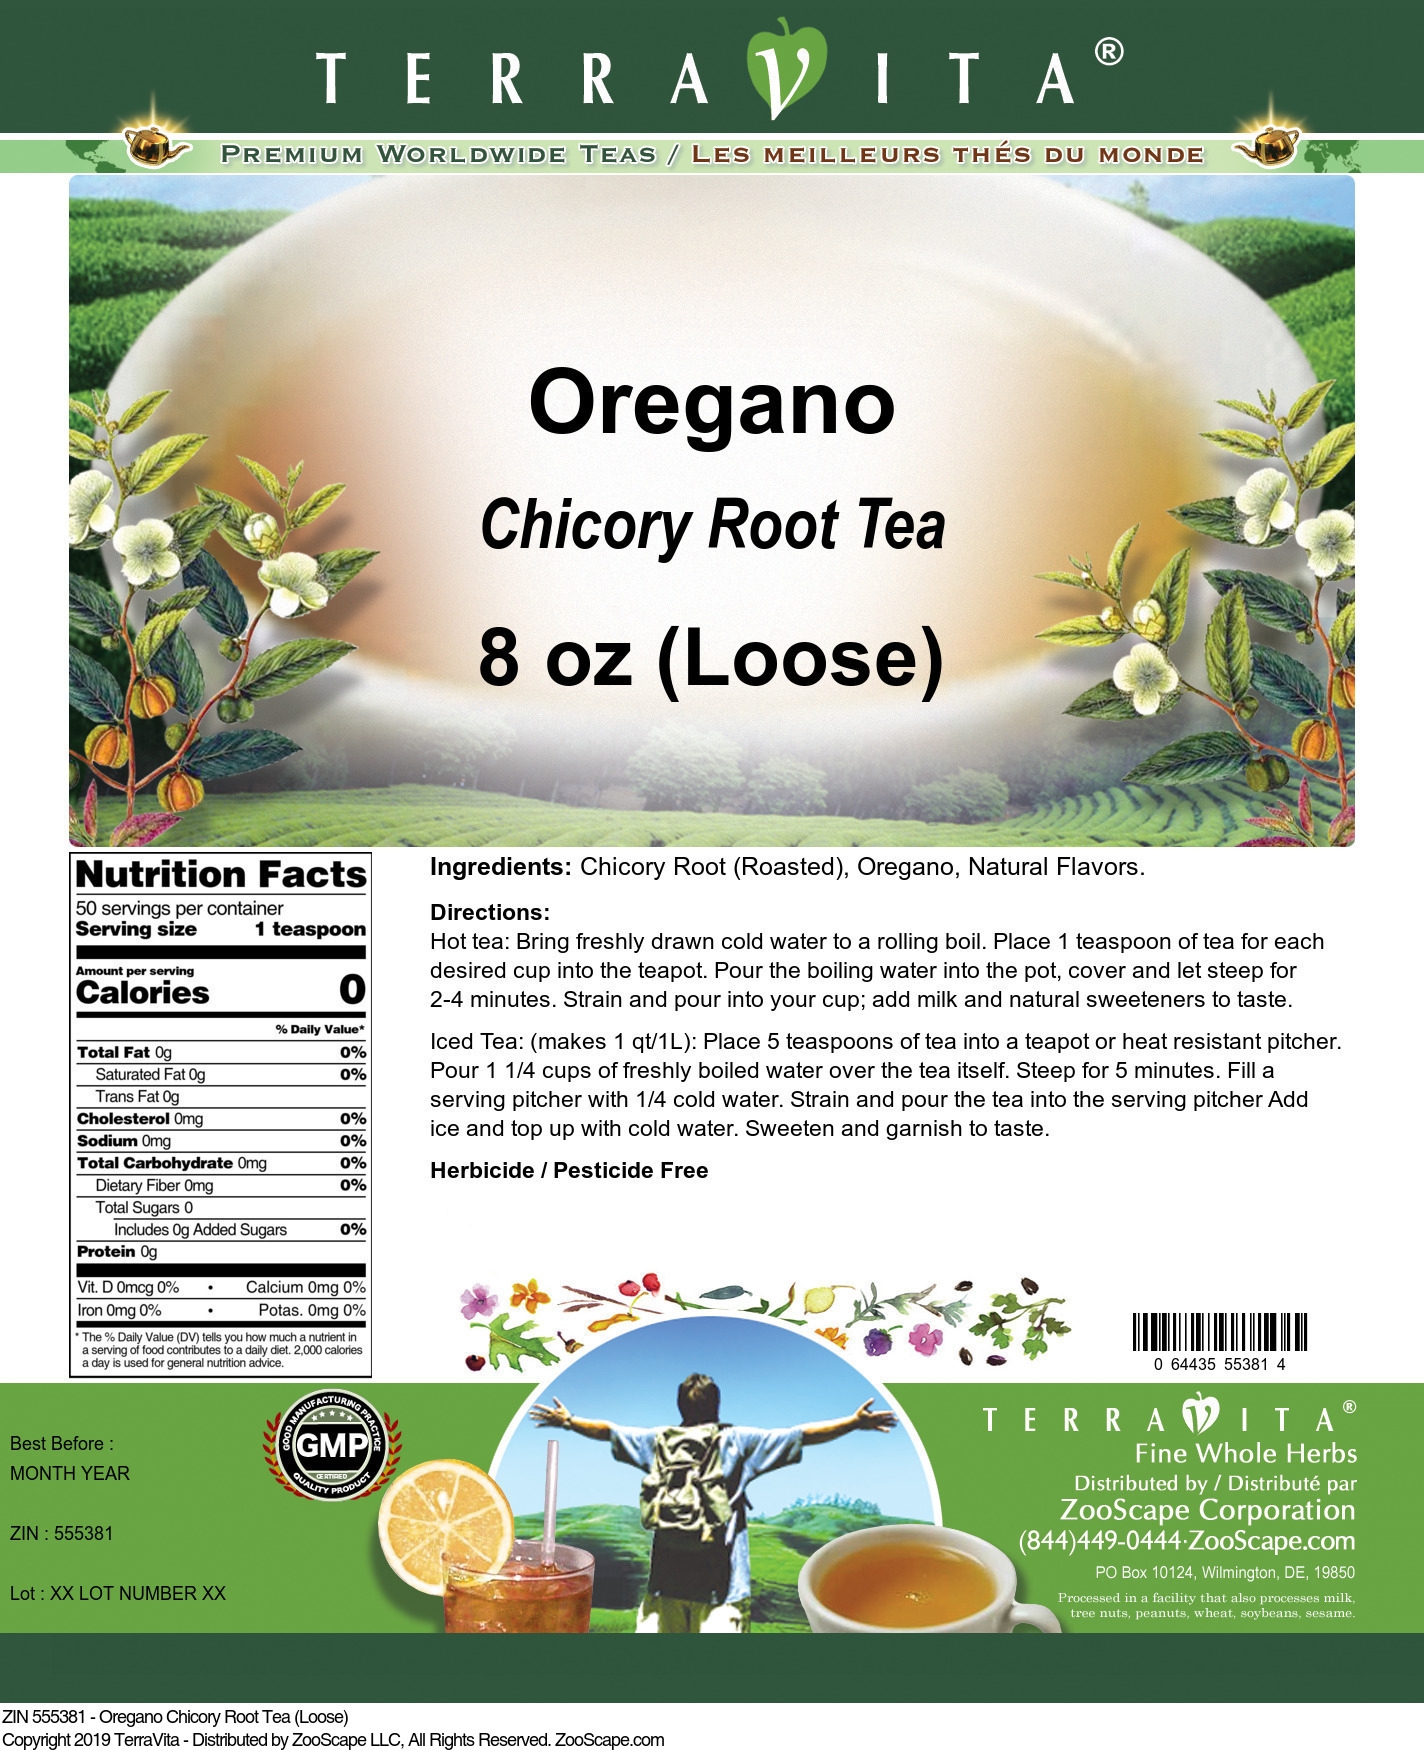 Oregano Chicory Root Tea (Loose) - Label